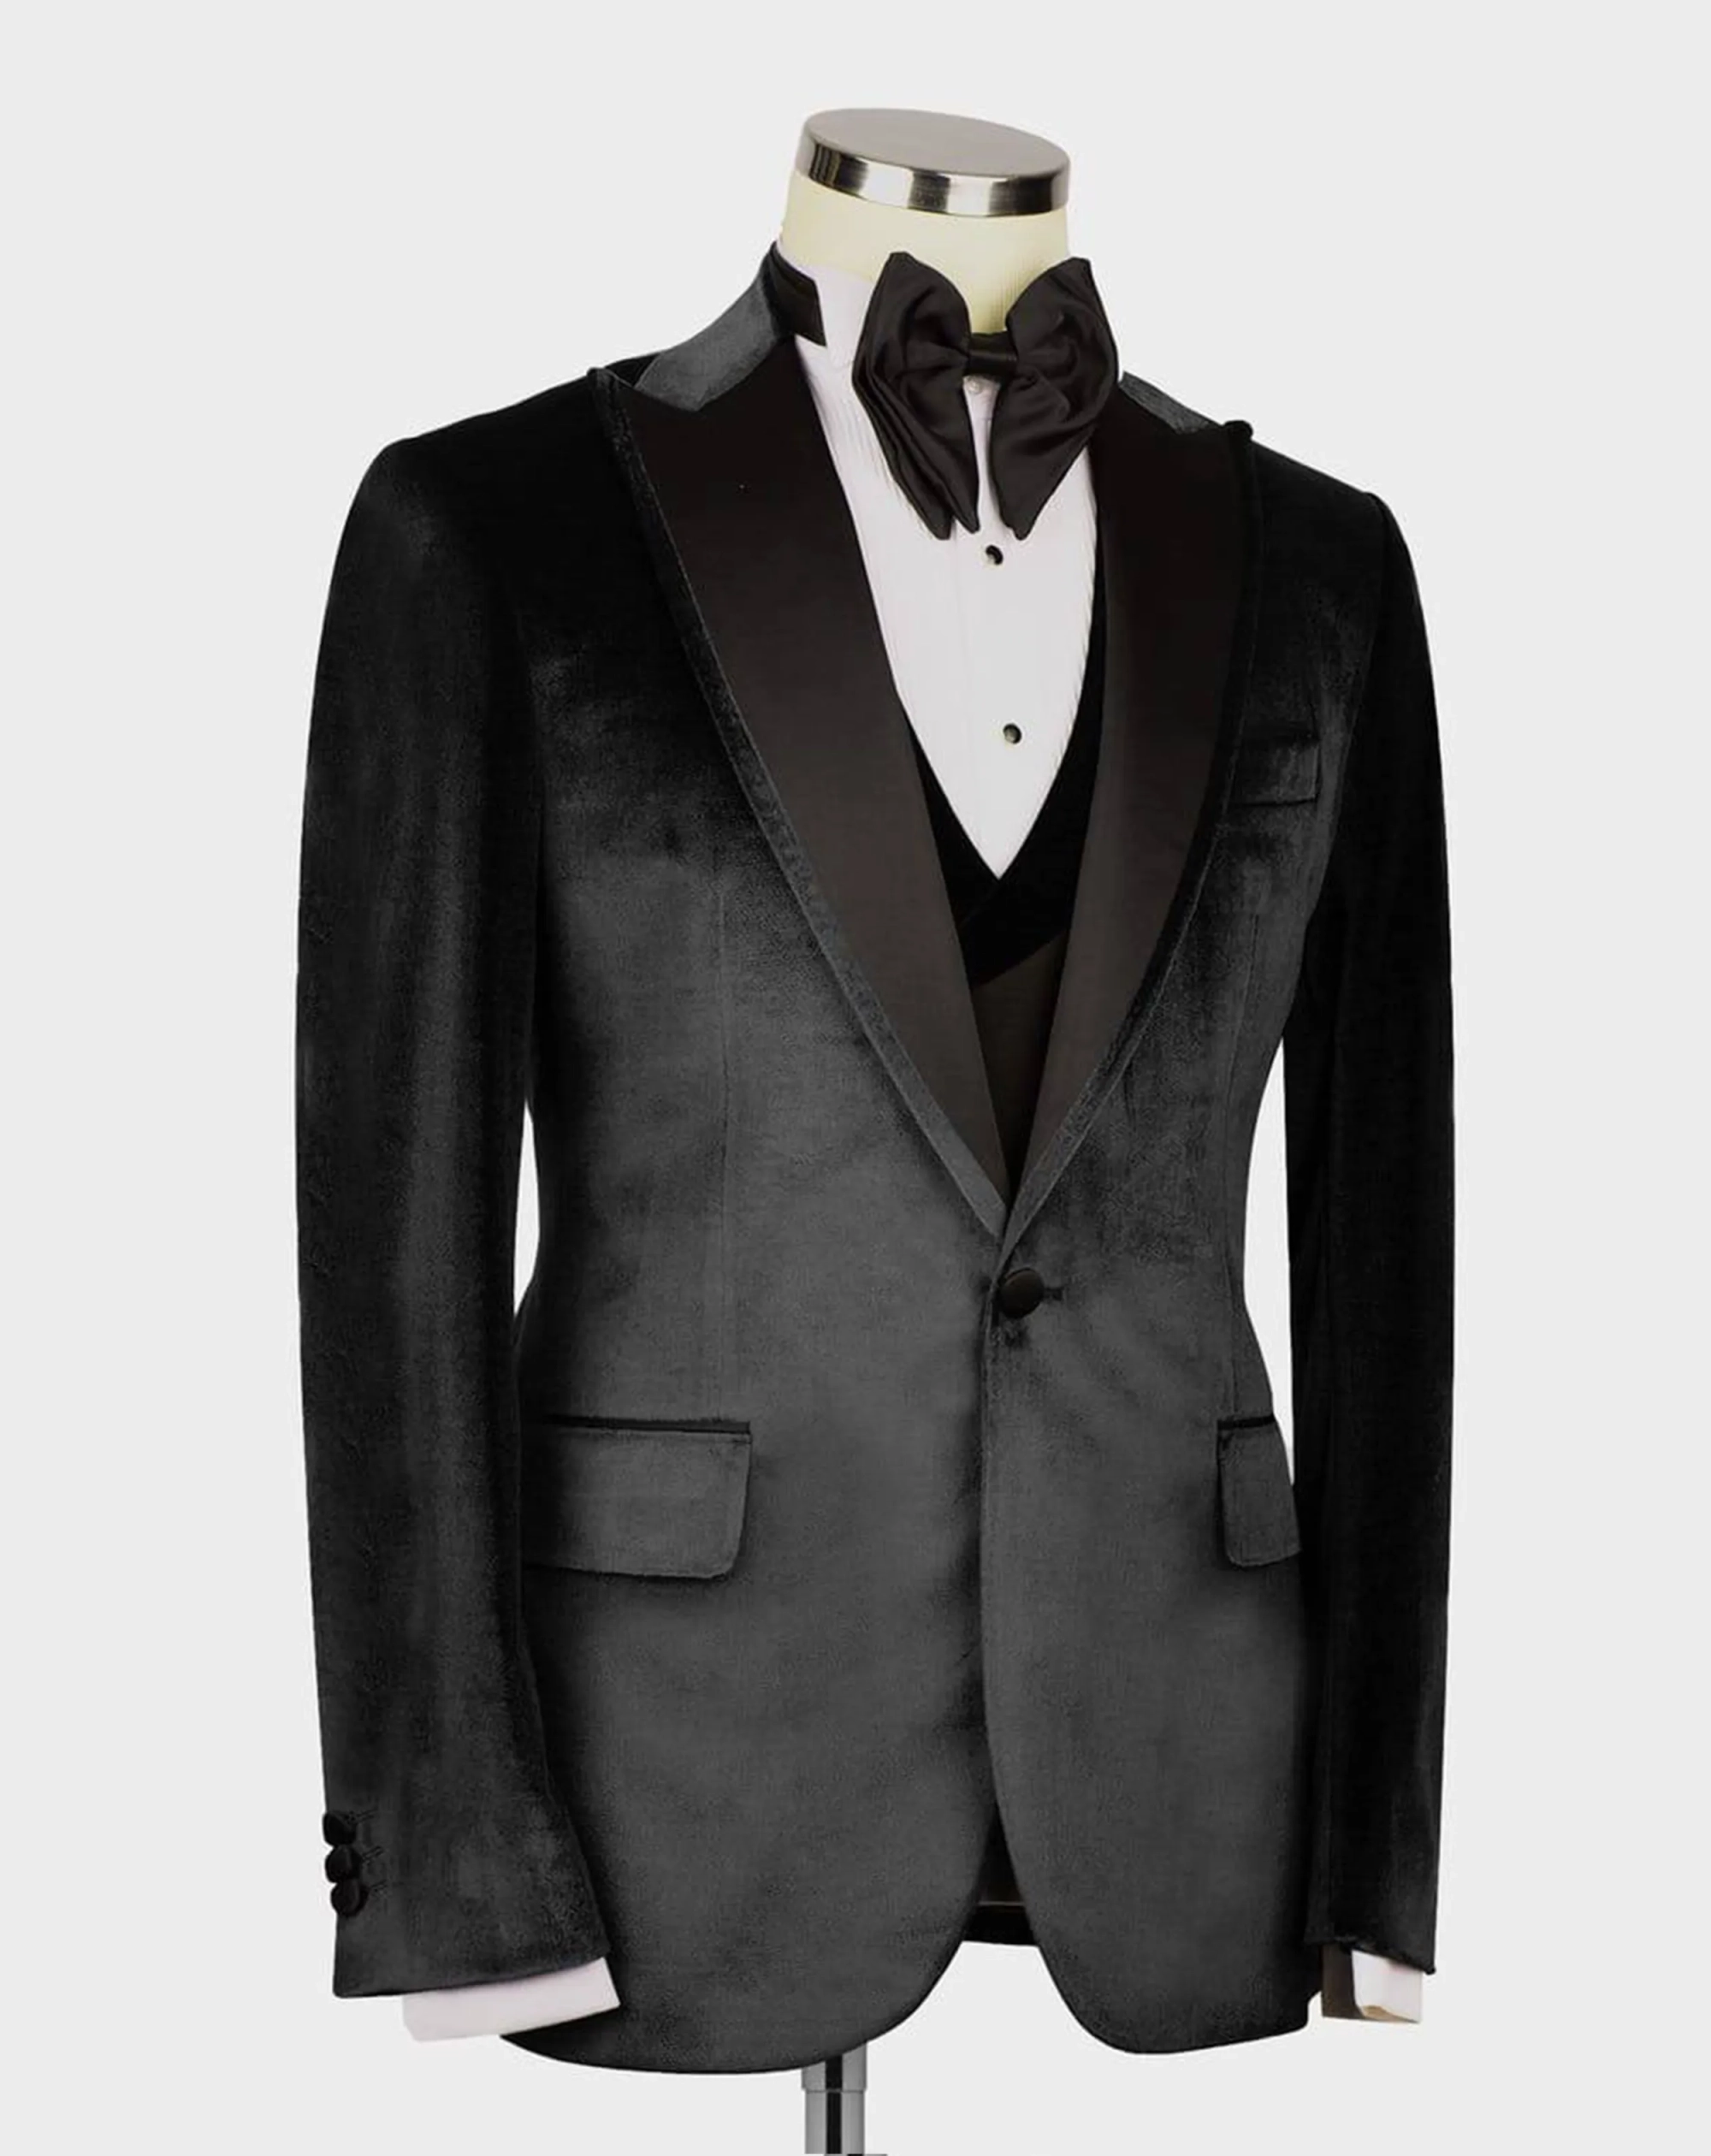 Lamezia Terme black tuxedo suit